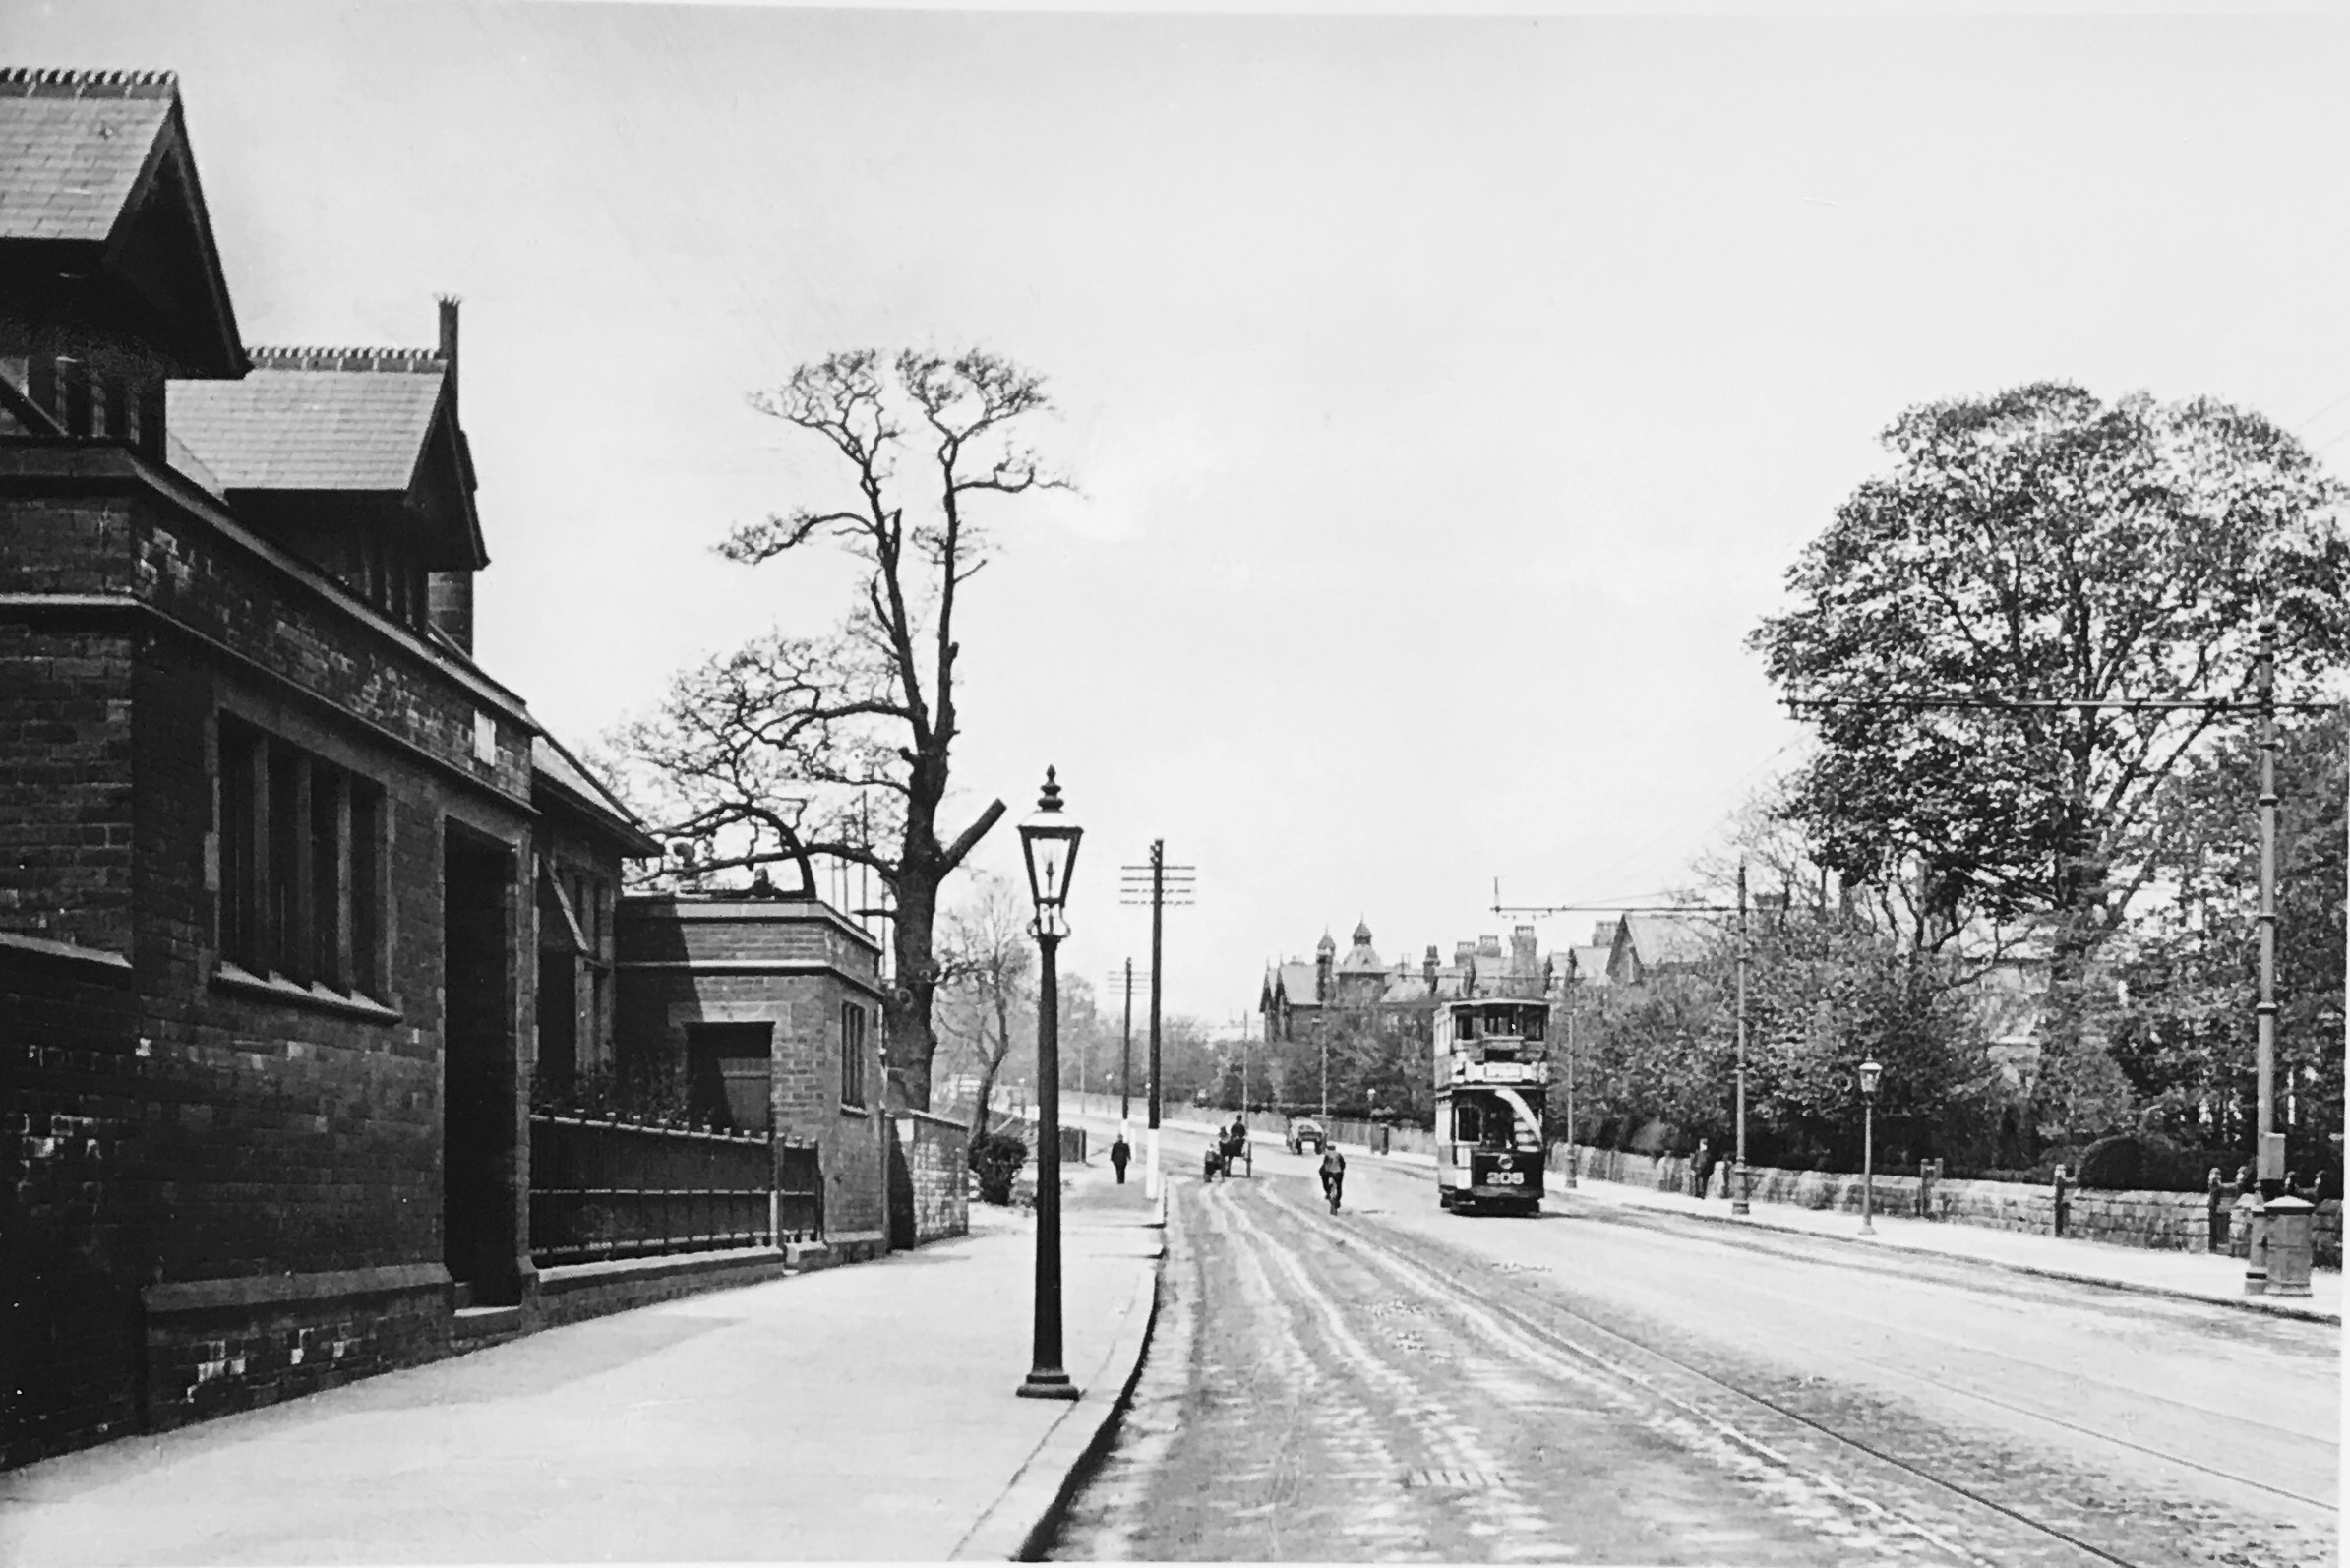 St Chad's School, Otley Road, circa 1910